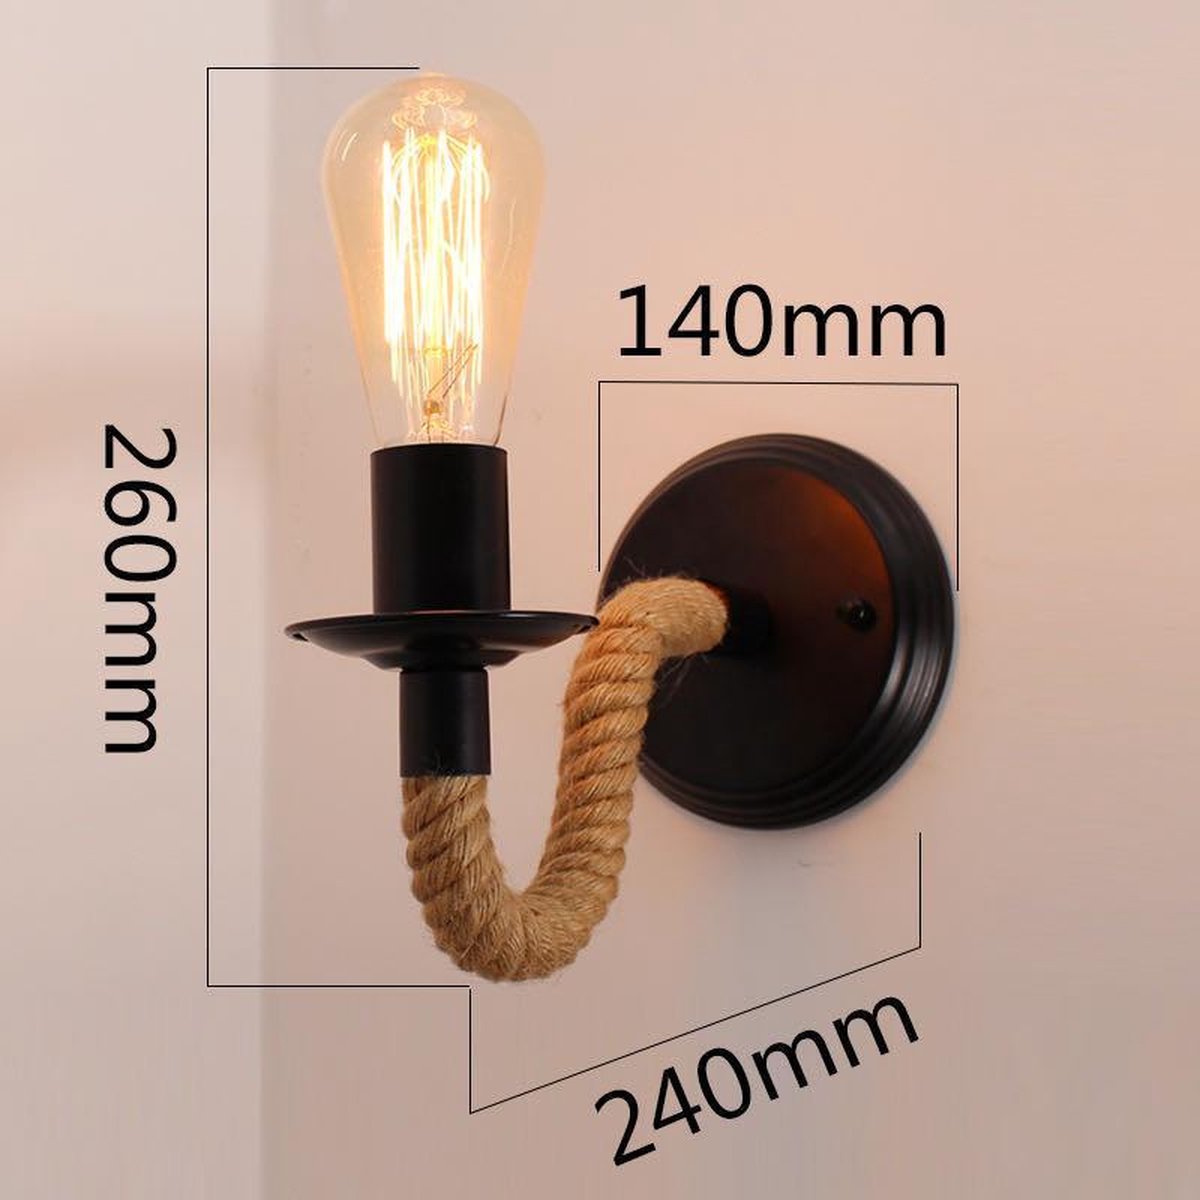 Wandlamp - Staand - Touwlamp - Wandlamp binnen - Bedlamp - Leeslamp - Lamp  - E27 fitting | bol.com